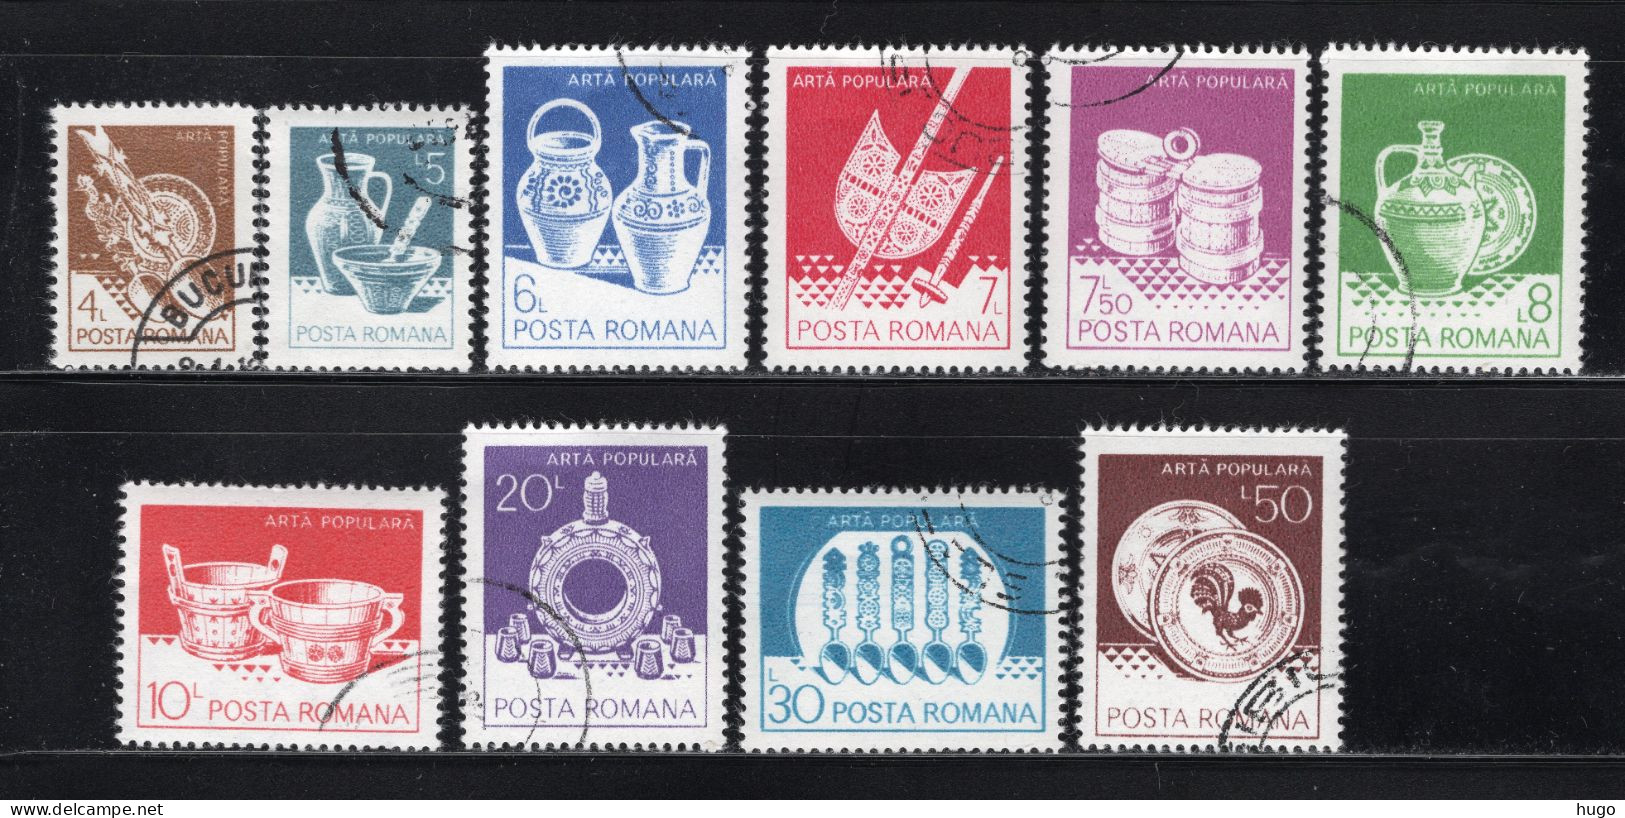 ROEMENIE Yt. 3424/3433° Gestempeld 1982 - Used Stamps